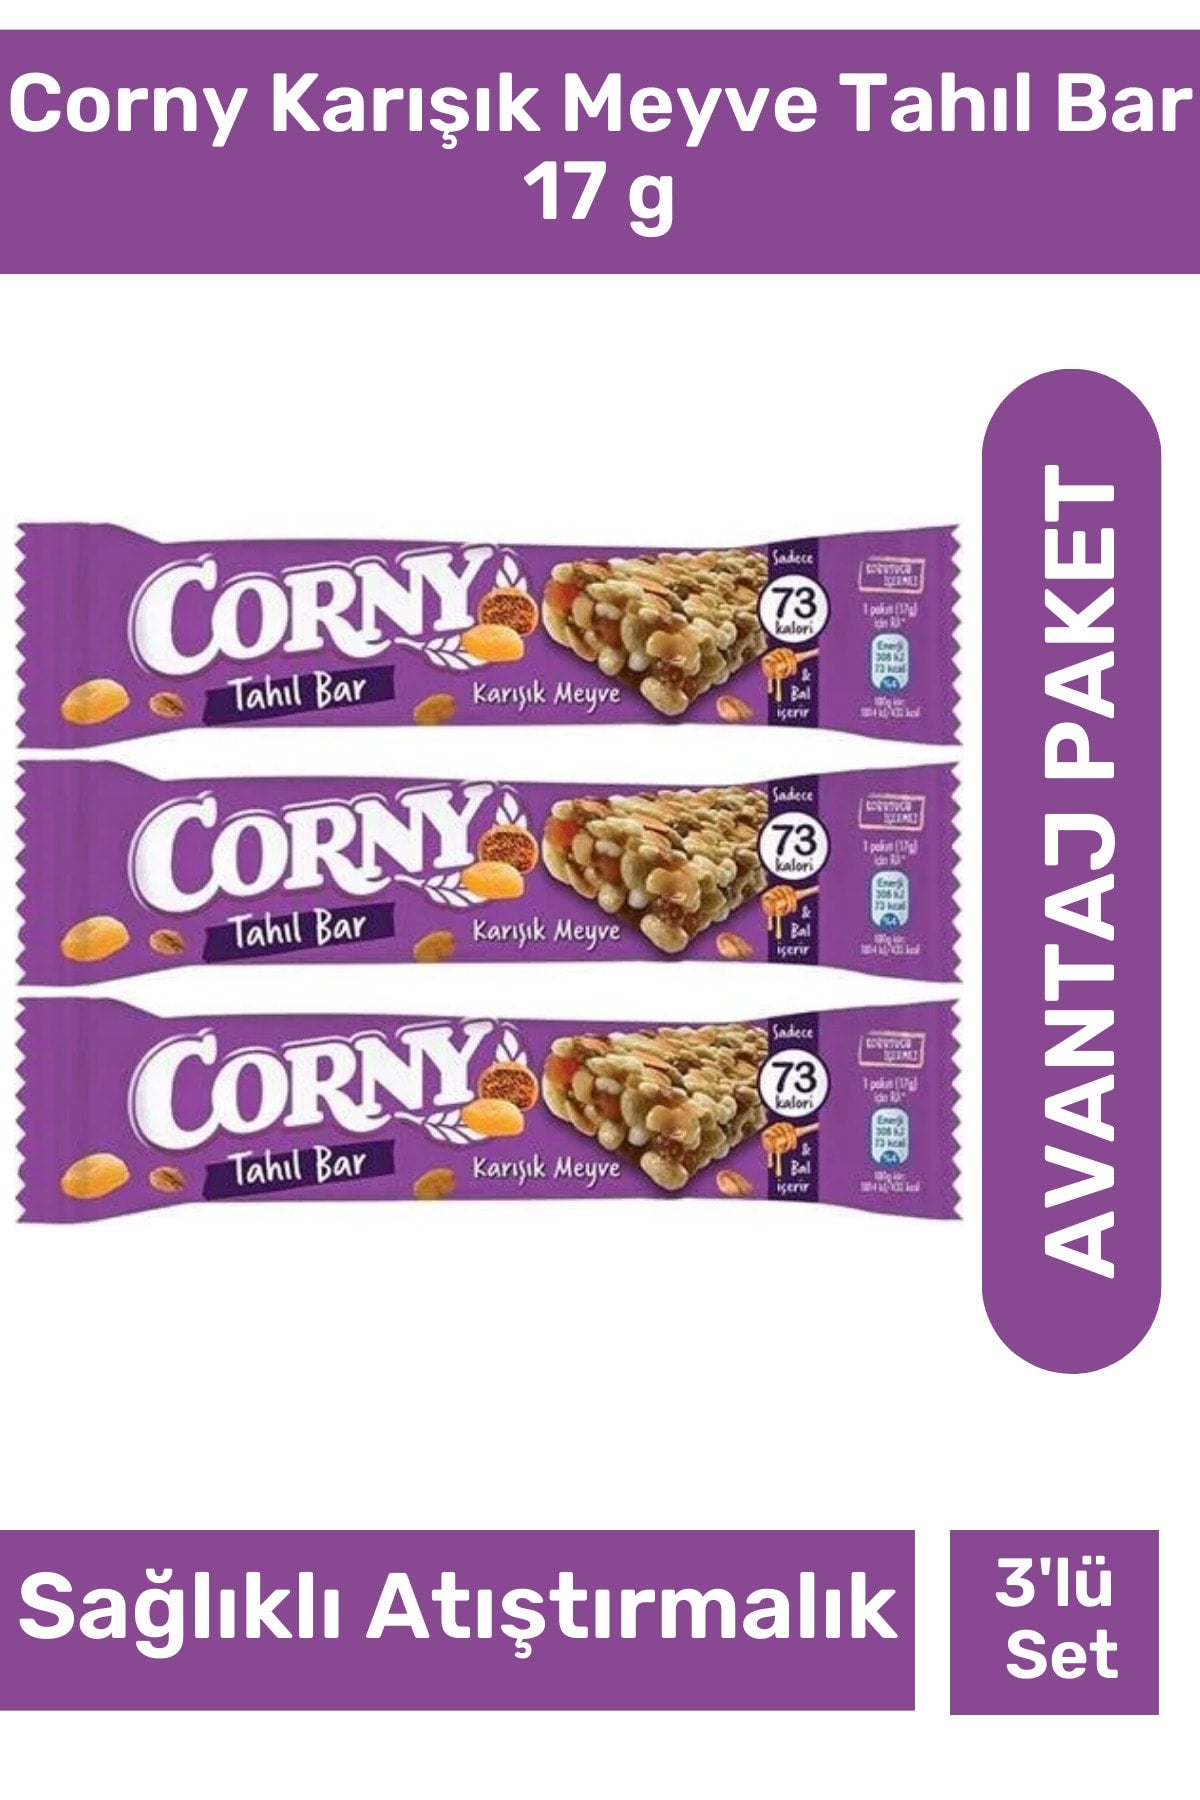 Corny Karışık Meyve Tahıl Bar 17 g 3'lü Paket